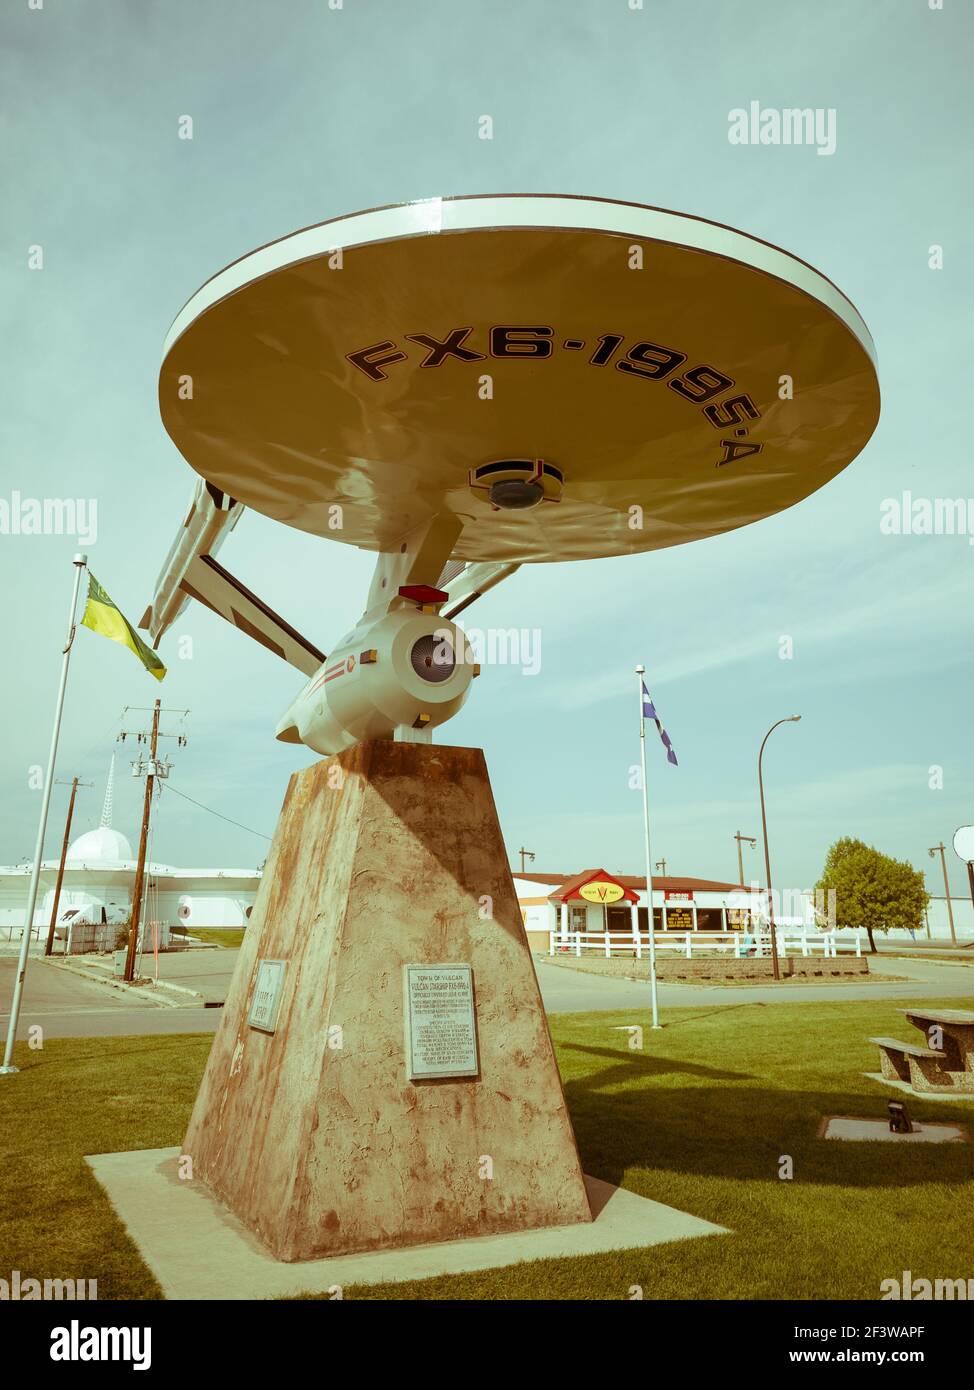 Star Trek USS Enterprise statue, Vulcan, Alberta, Canada Banque D'Images